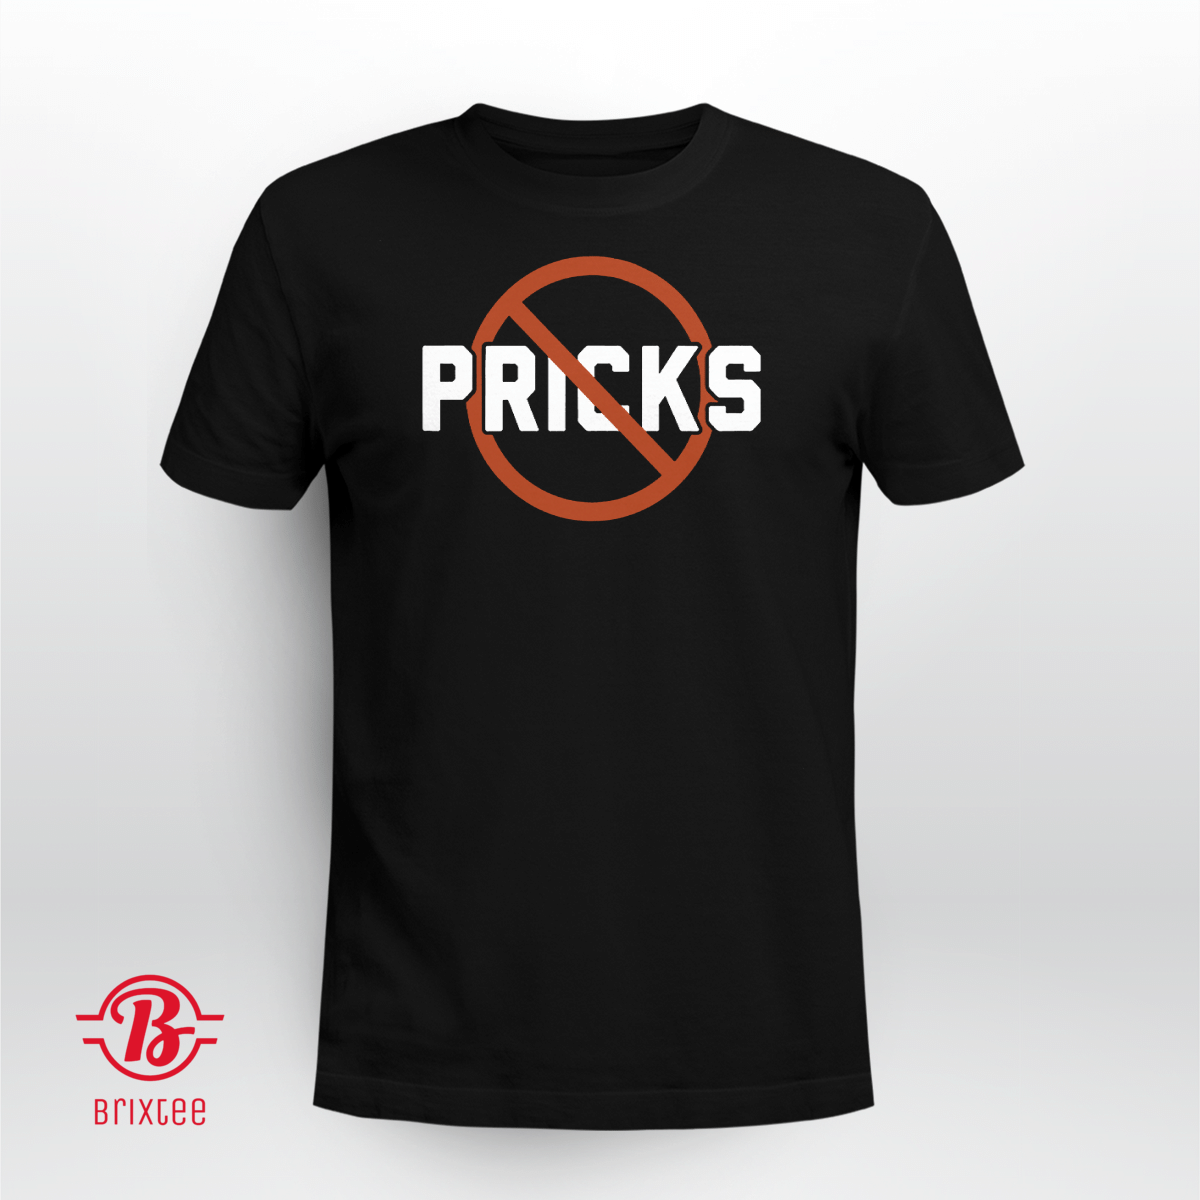 No Pricks - San Francisco Giants